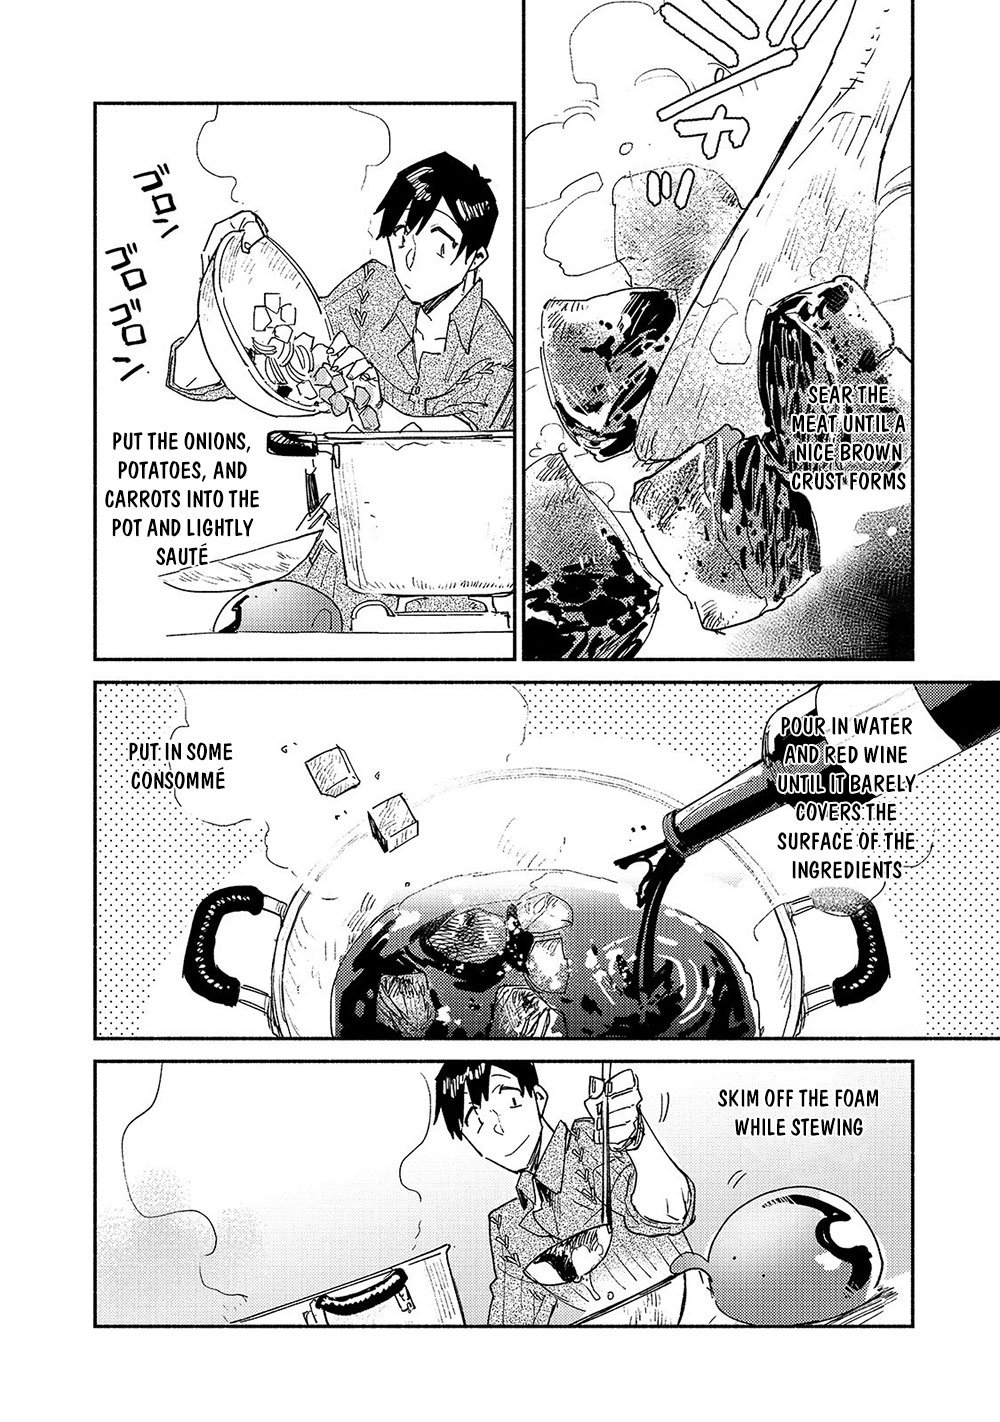 Read Tondemo Skill De Isekai Hourou Meshi: Sui No Daibouken Chapter 31 on  Mangakakalot